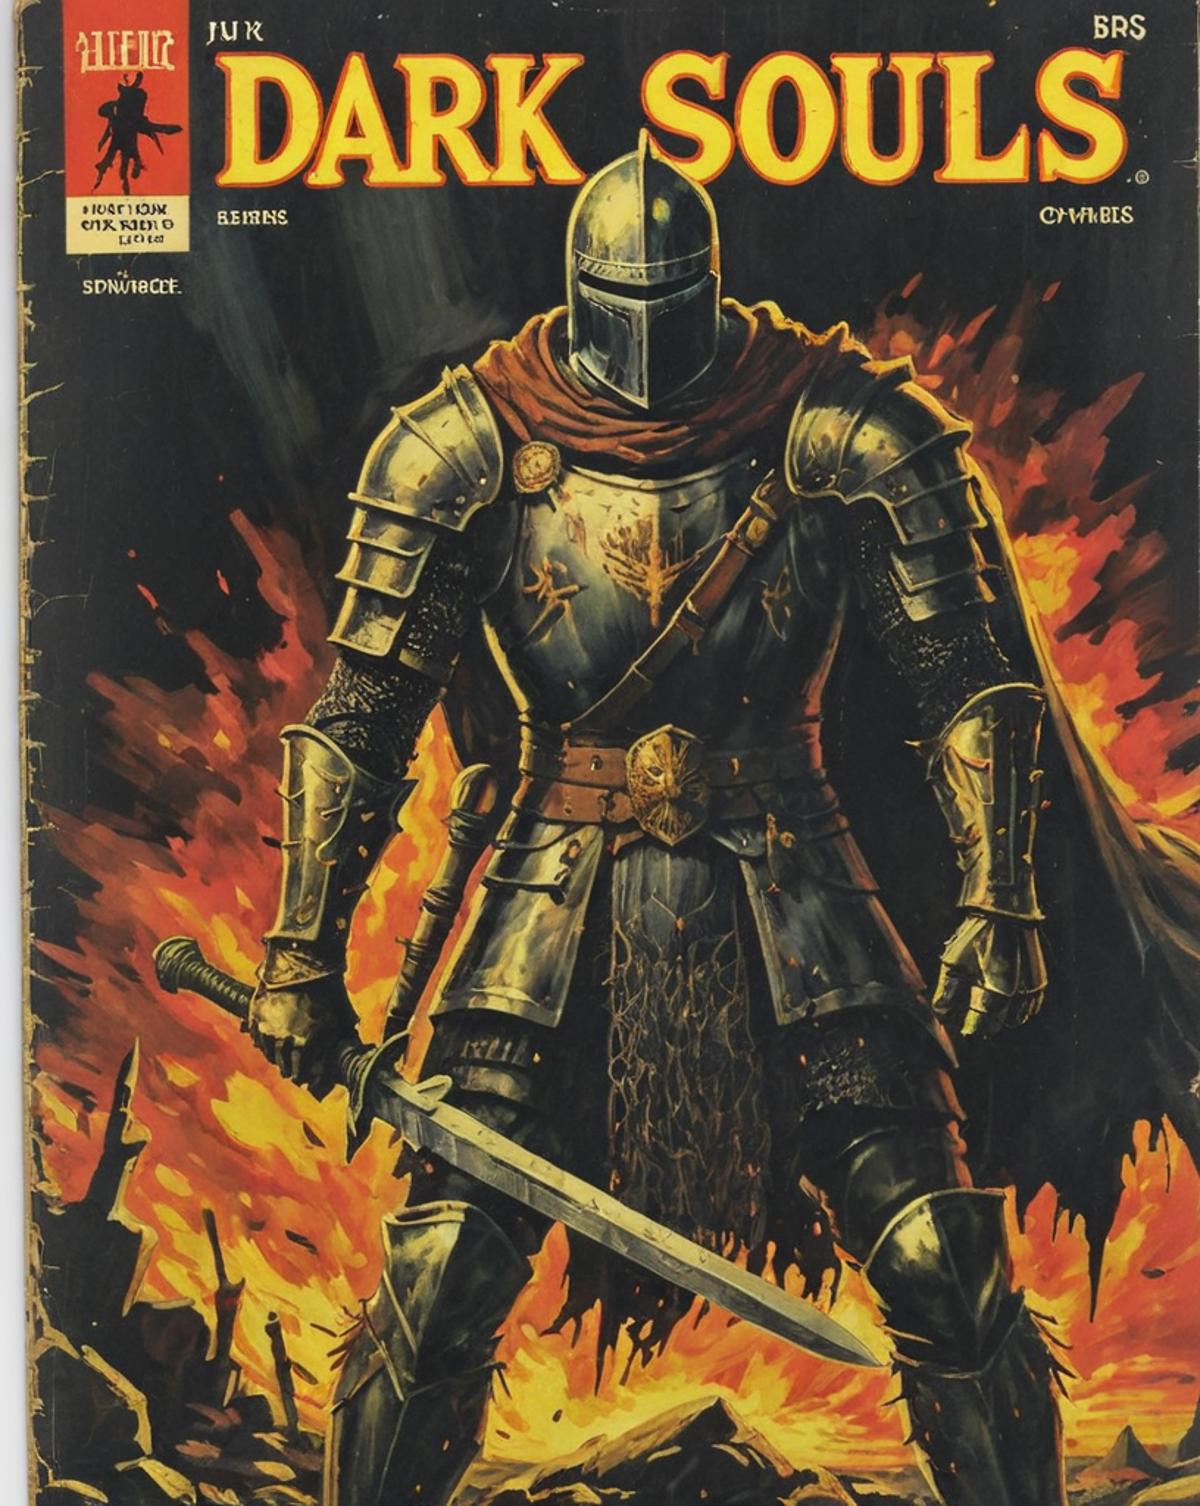 A Dark Souls comic book cover featuring a knight.